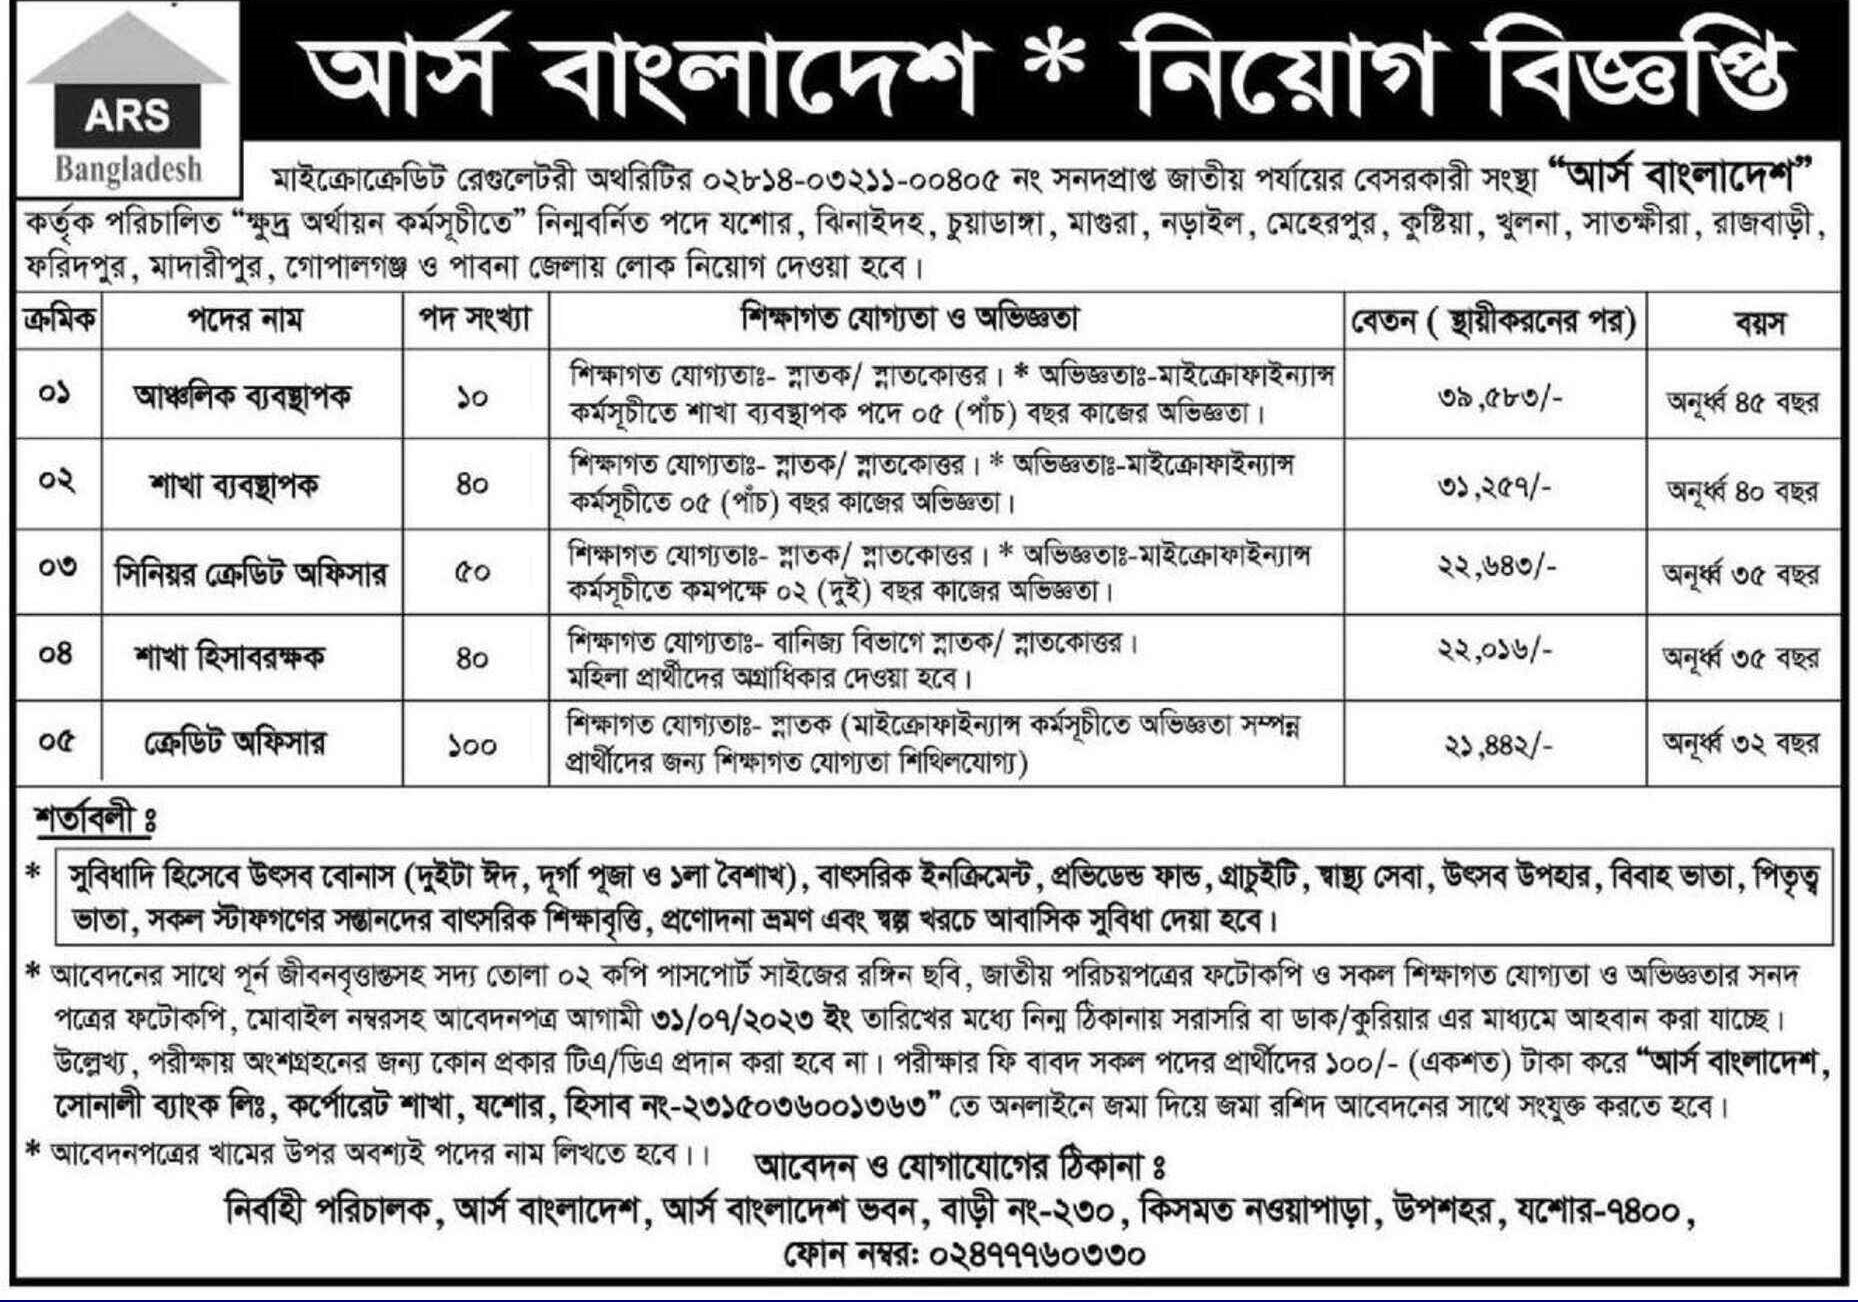 Job in ARS Bangladesh